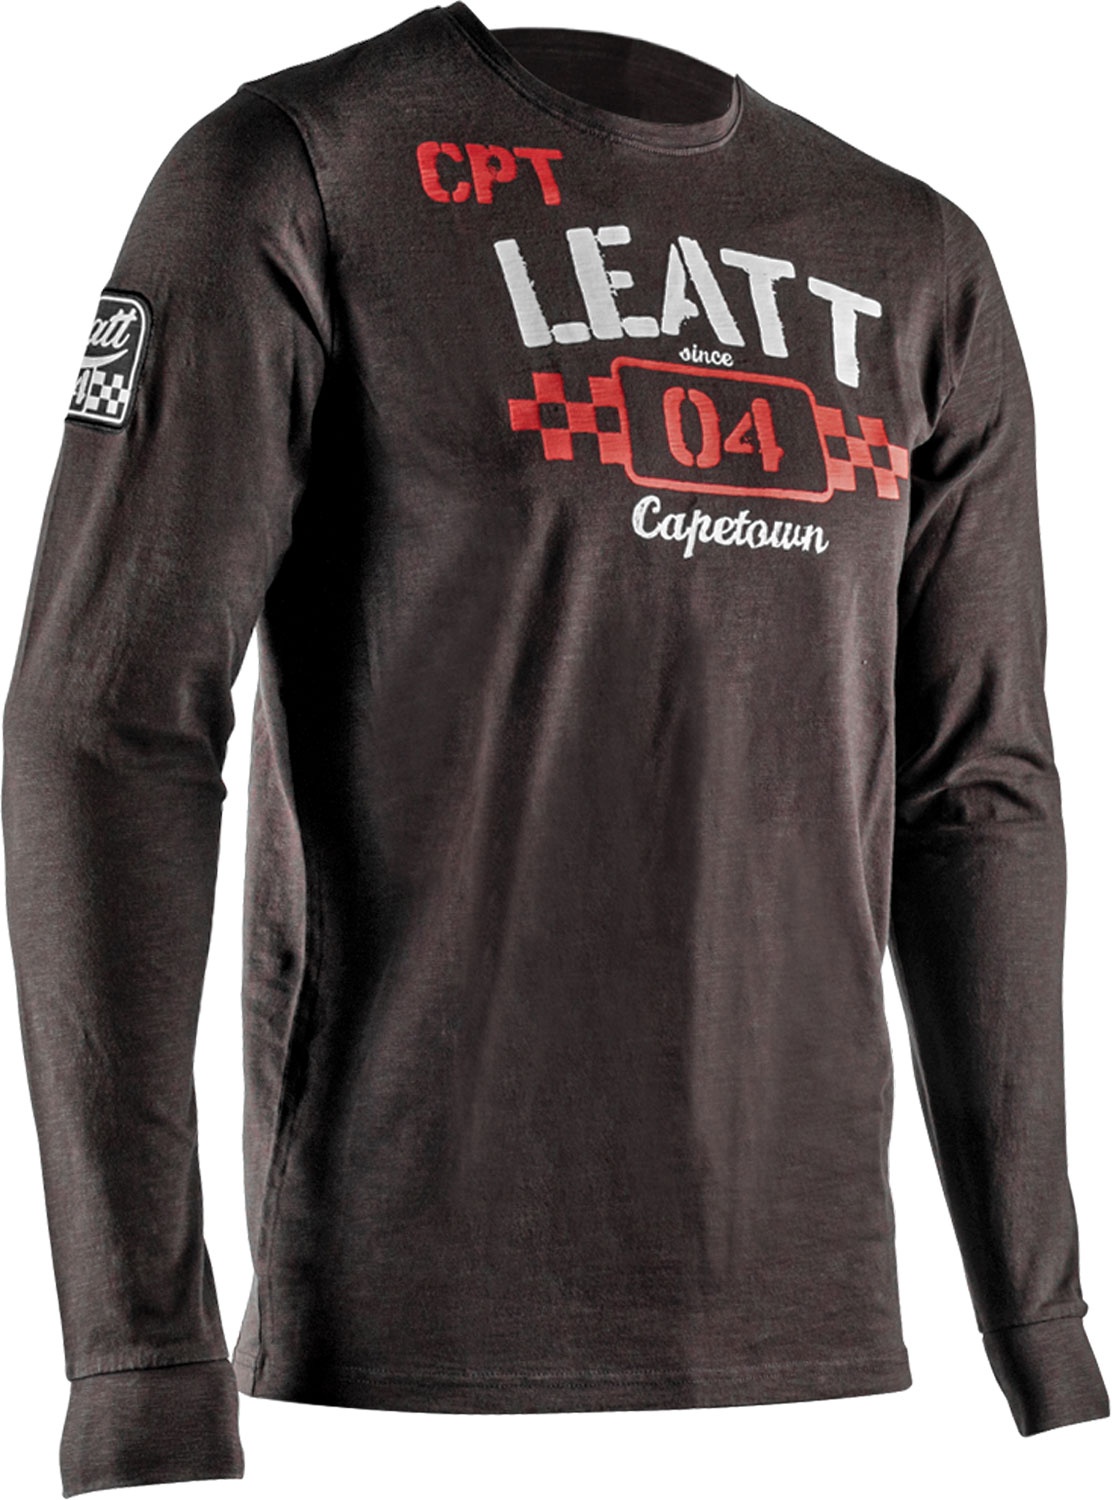 Leatt Heritage S22, sweat-shirt - Noir/Rouge/Blanc - XXL